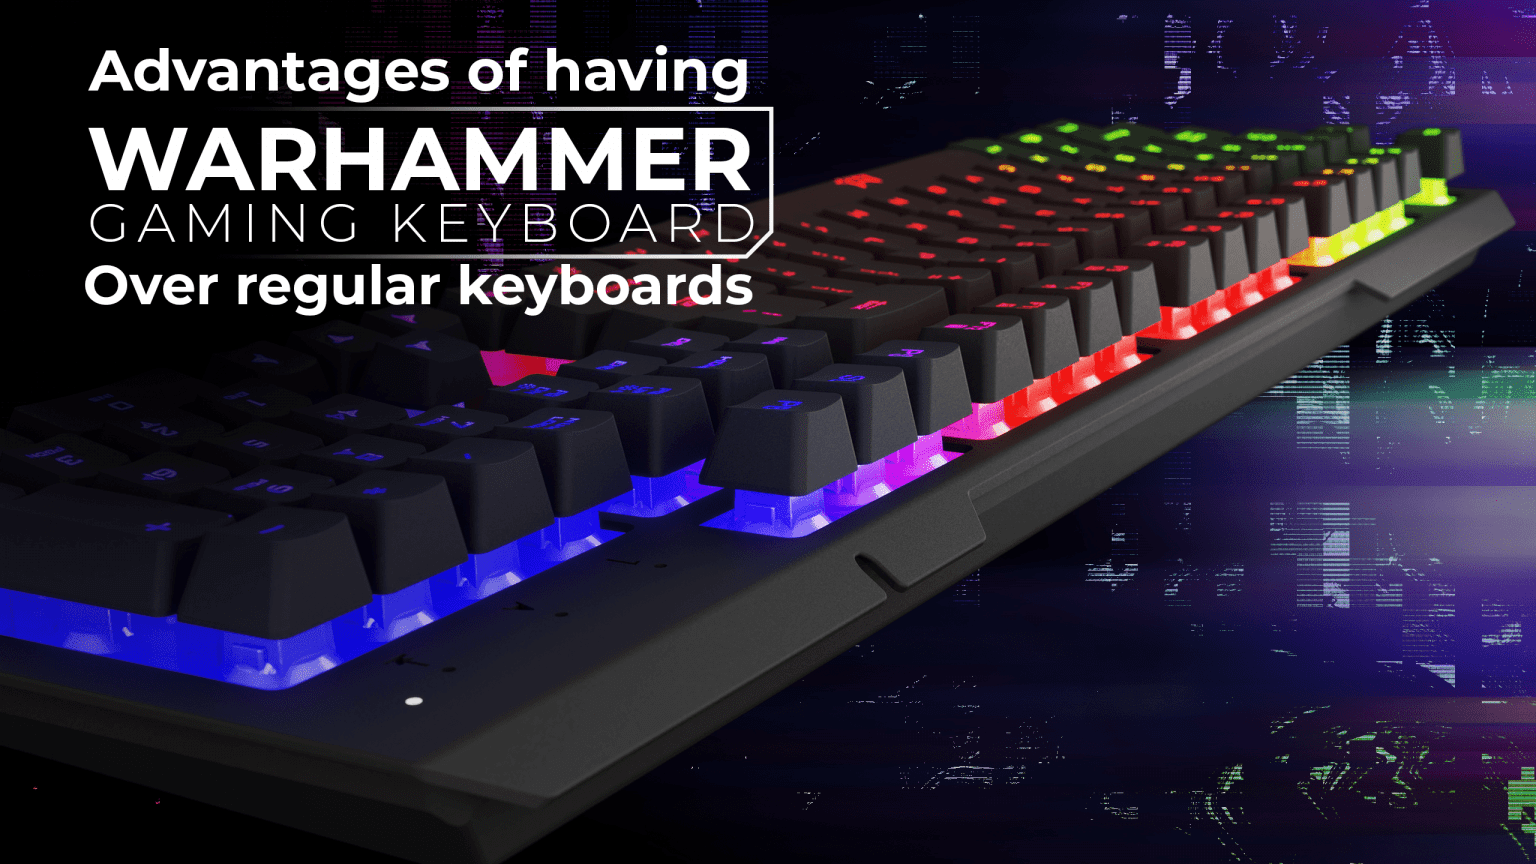 Advantages of having Warhammer Gaming keyboard over regular keyboards